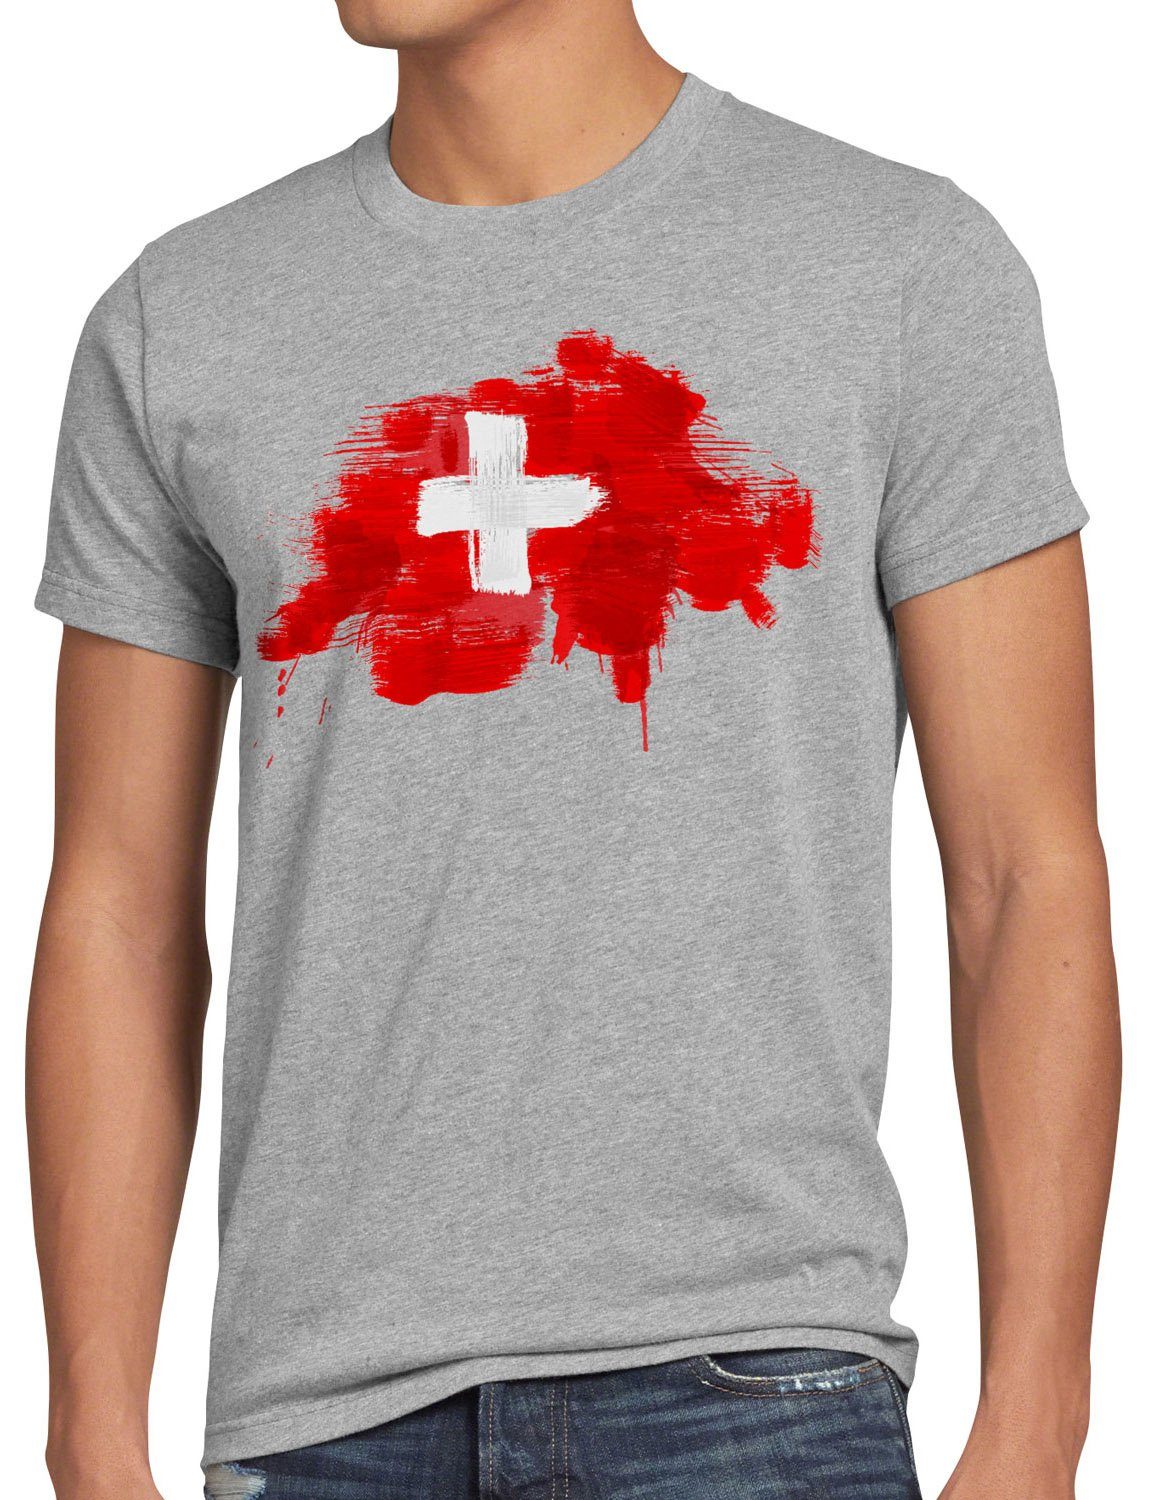 style3 Print-Shirt Herren T-Shirt Flagge Schweiz Fußball Sport Suisse WM EM Fahne grau meliert